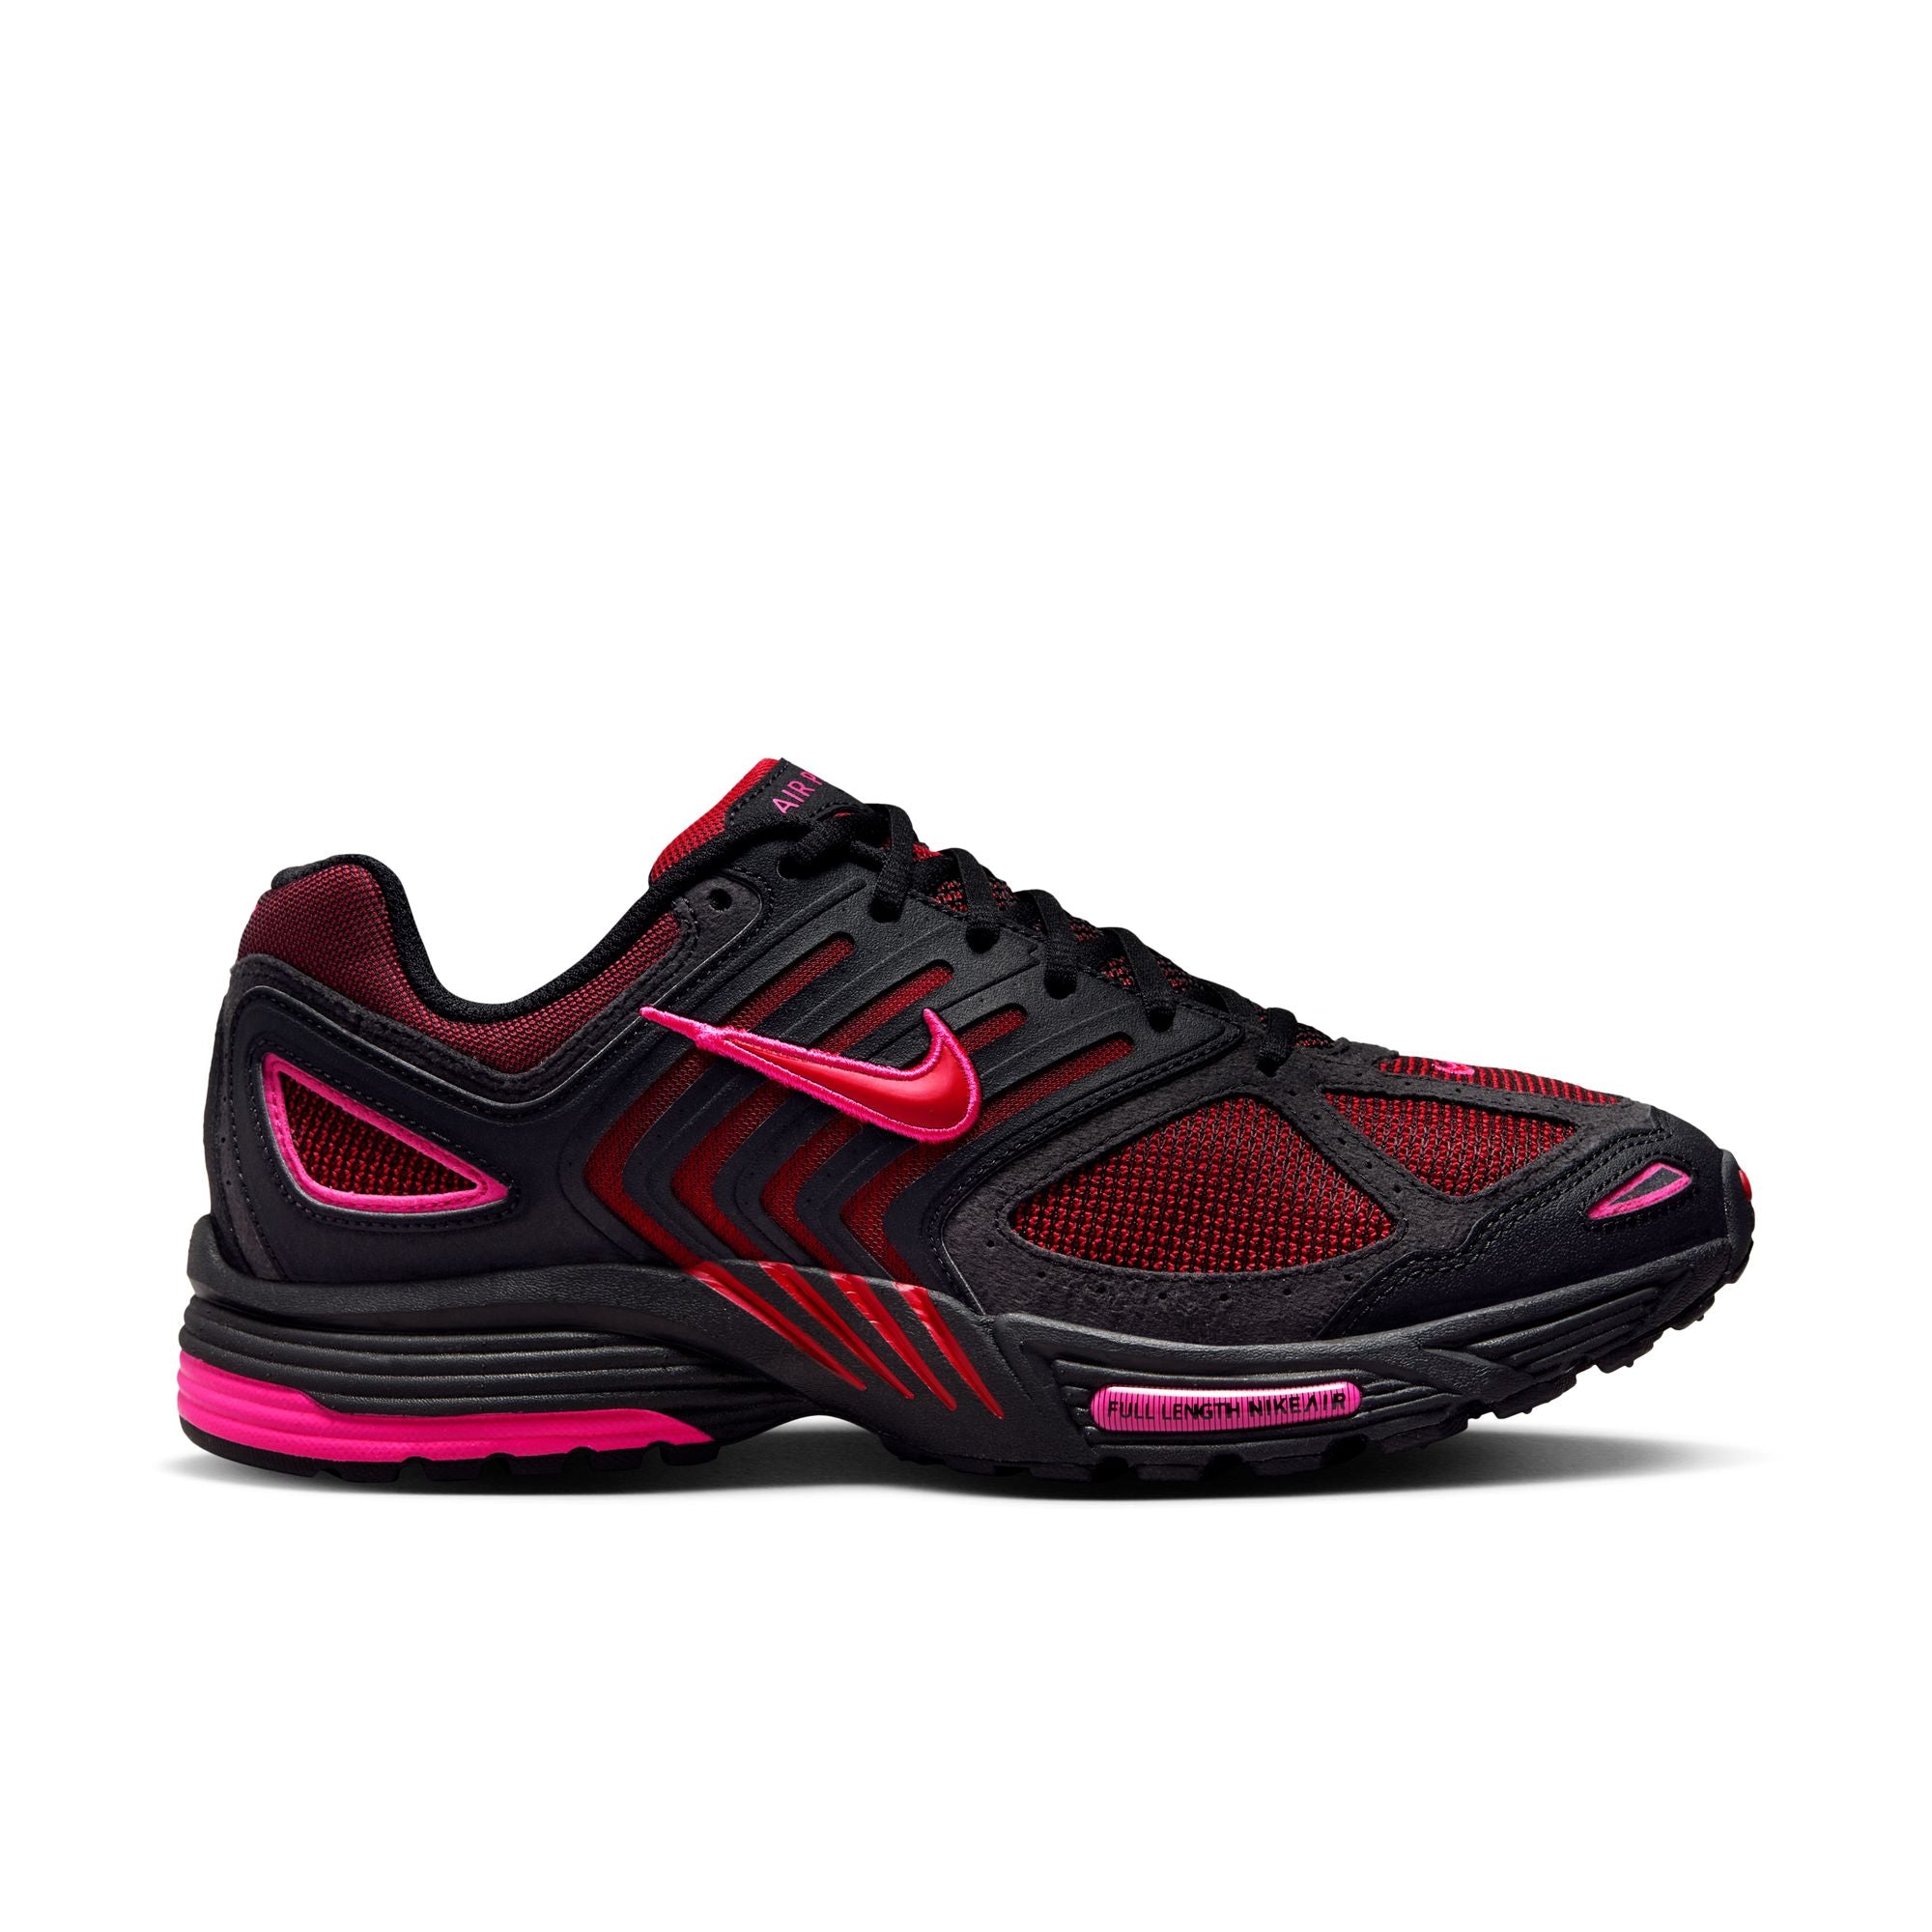 NIKE - Nike Air Peg 2K5 - (Black/Fire Red-Fierce Pink-Fie) view 1